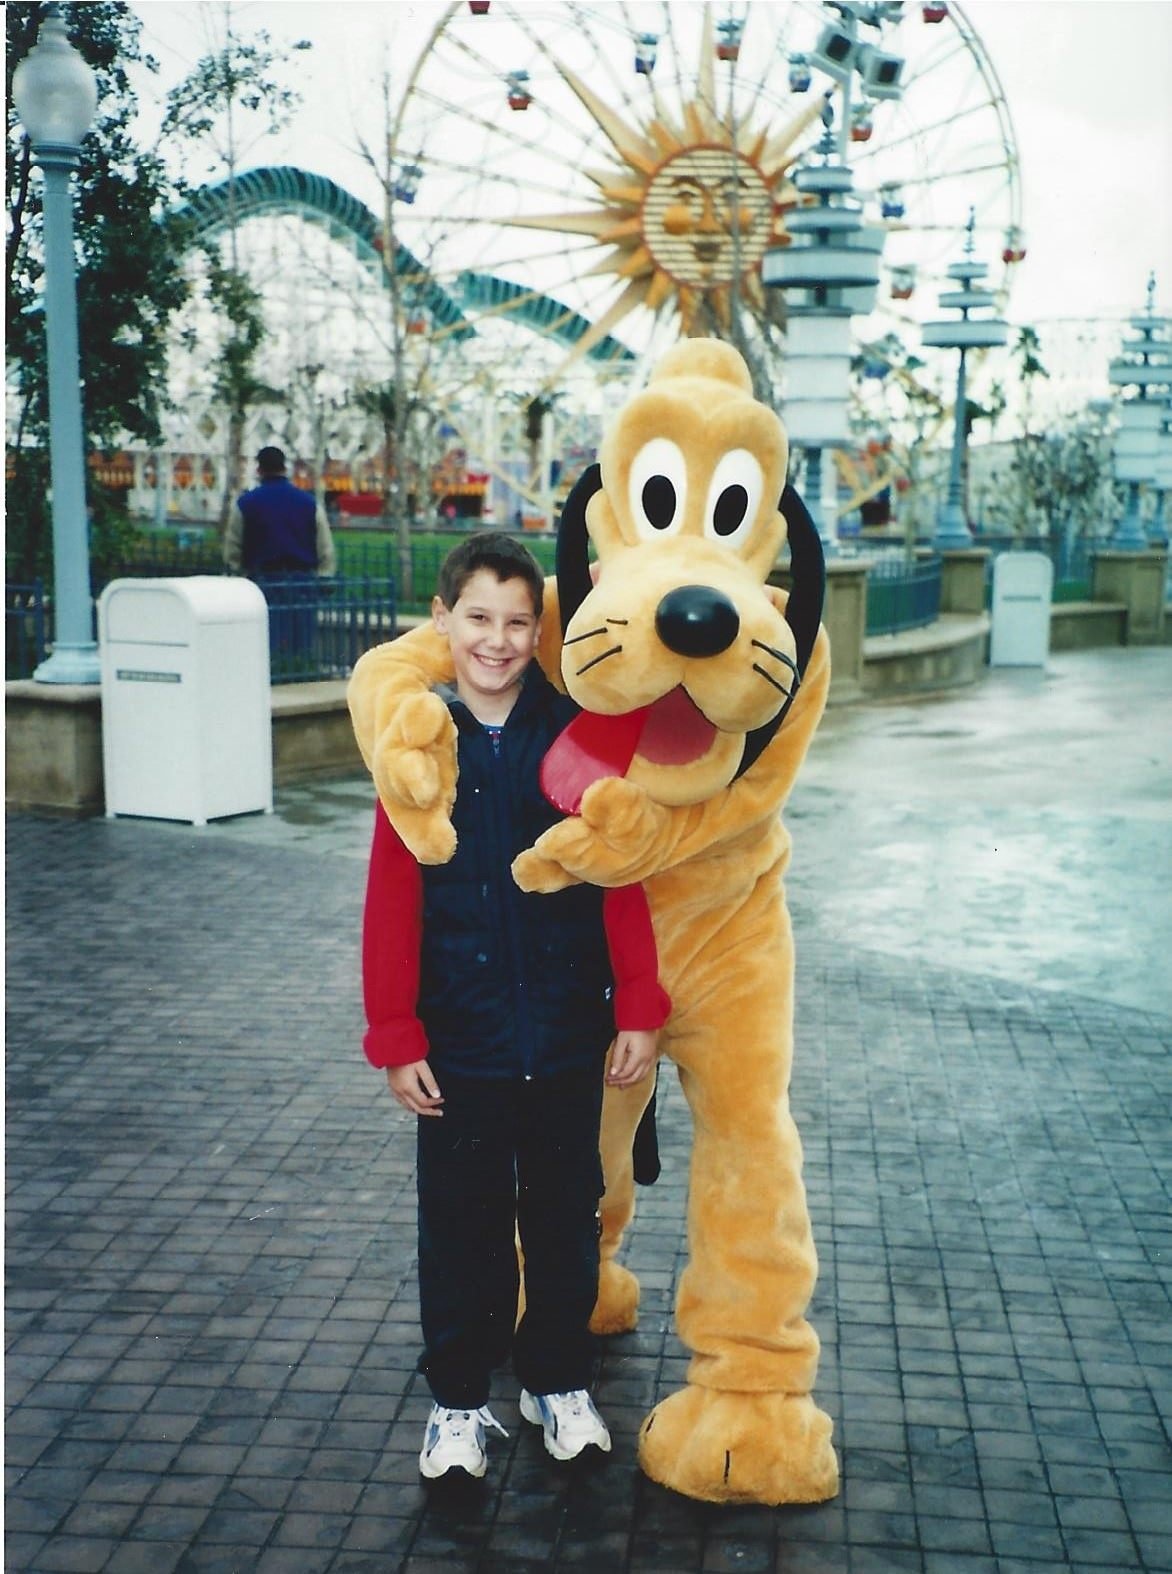 Disney California Adventure, February 2001 (Photo courtesy 